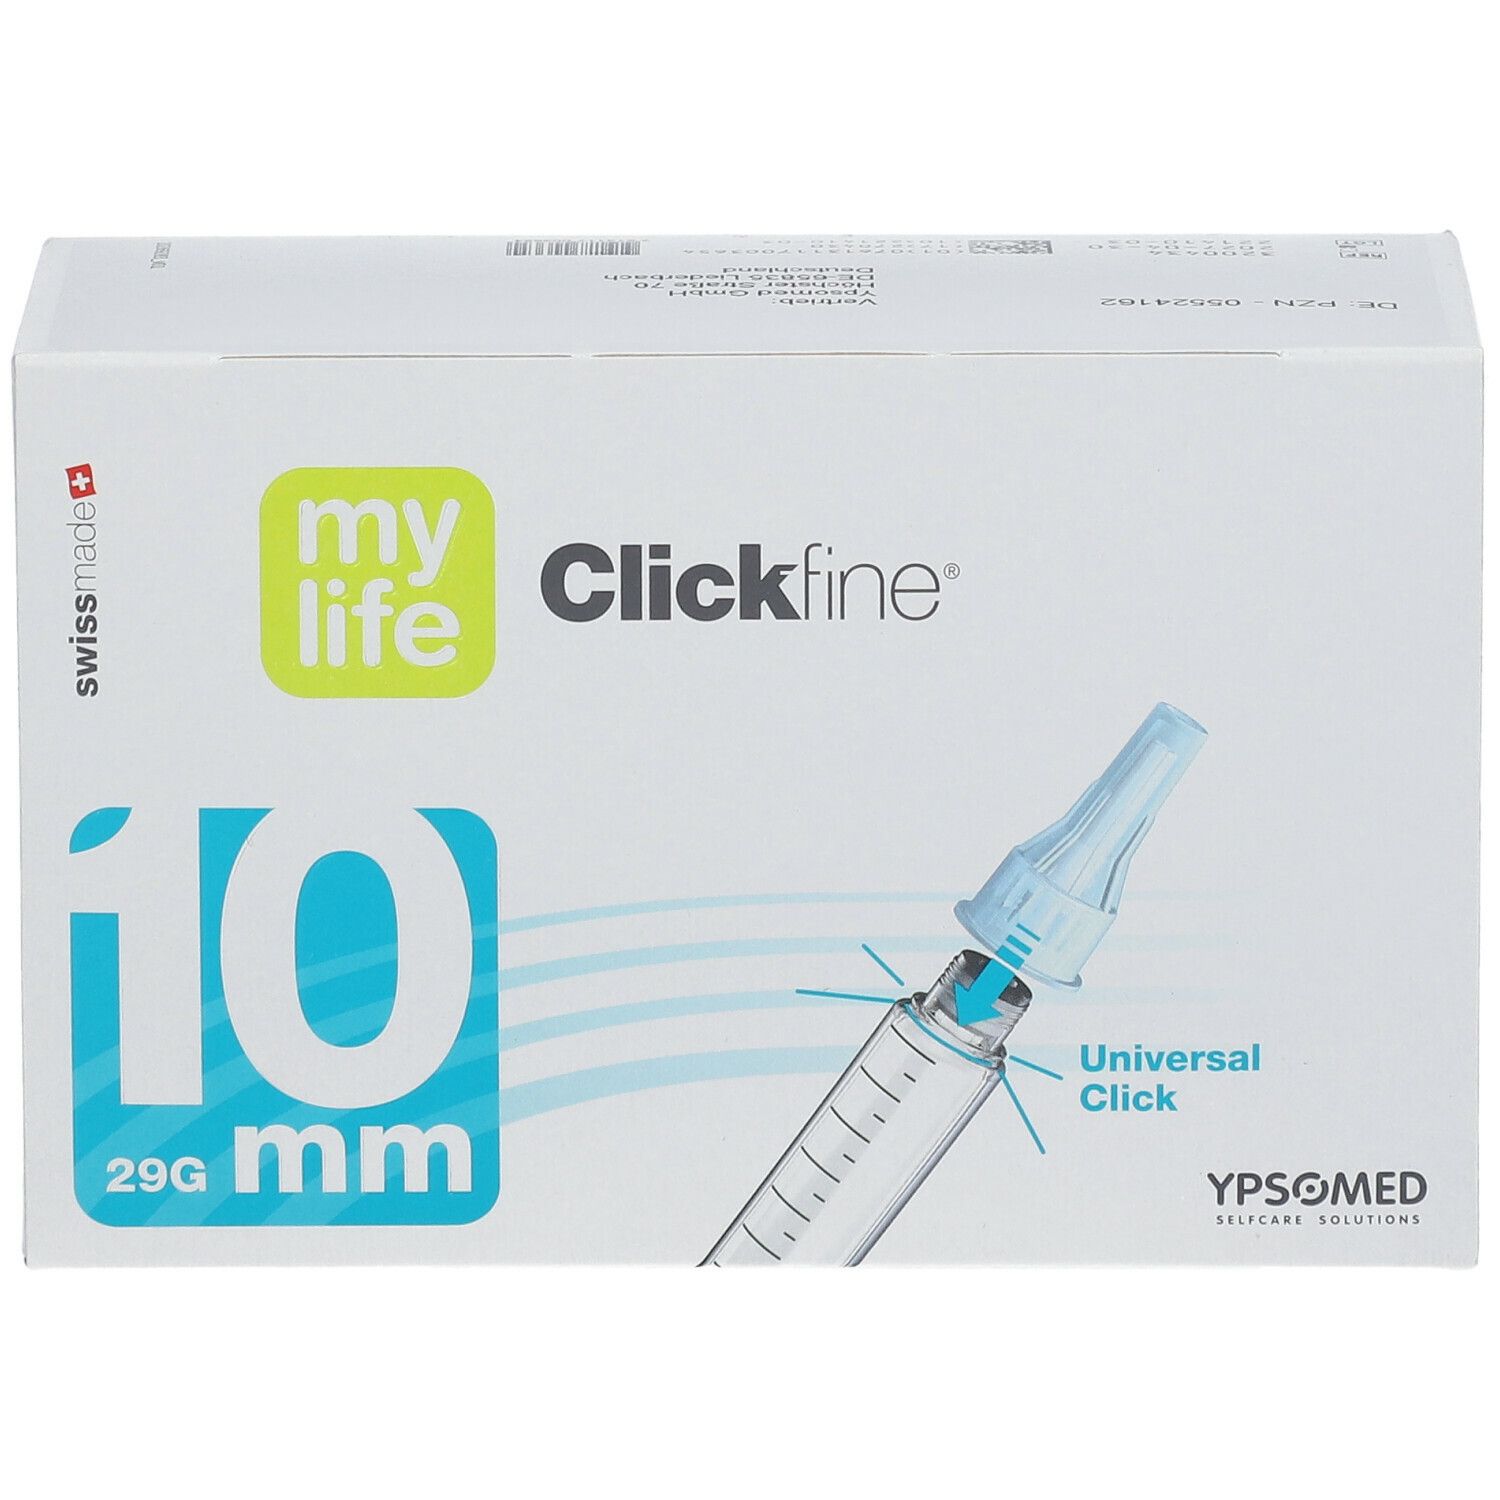 mylife Clickfine® 10 mm Kanülen